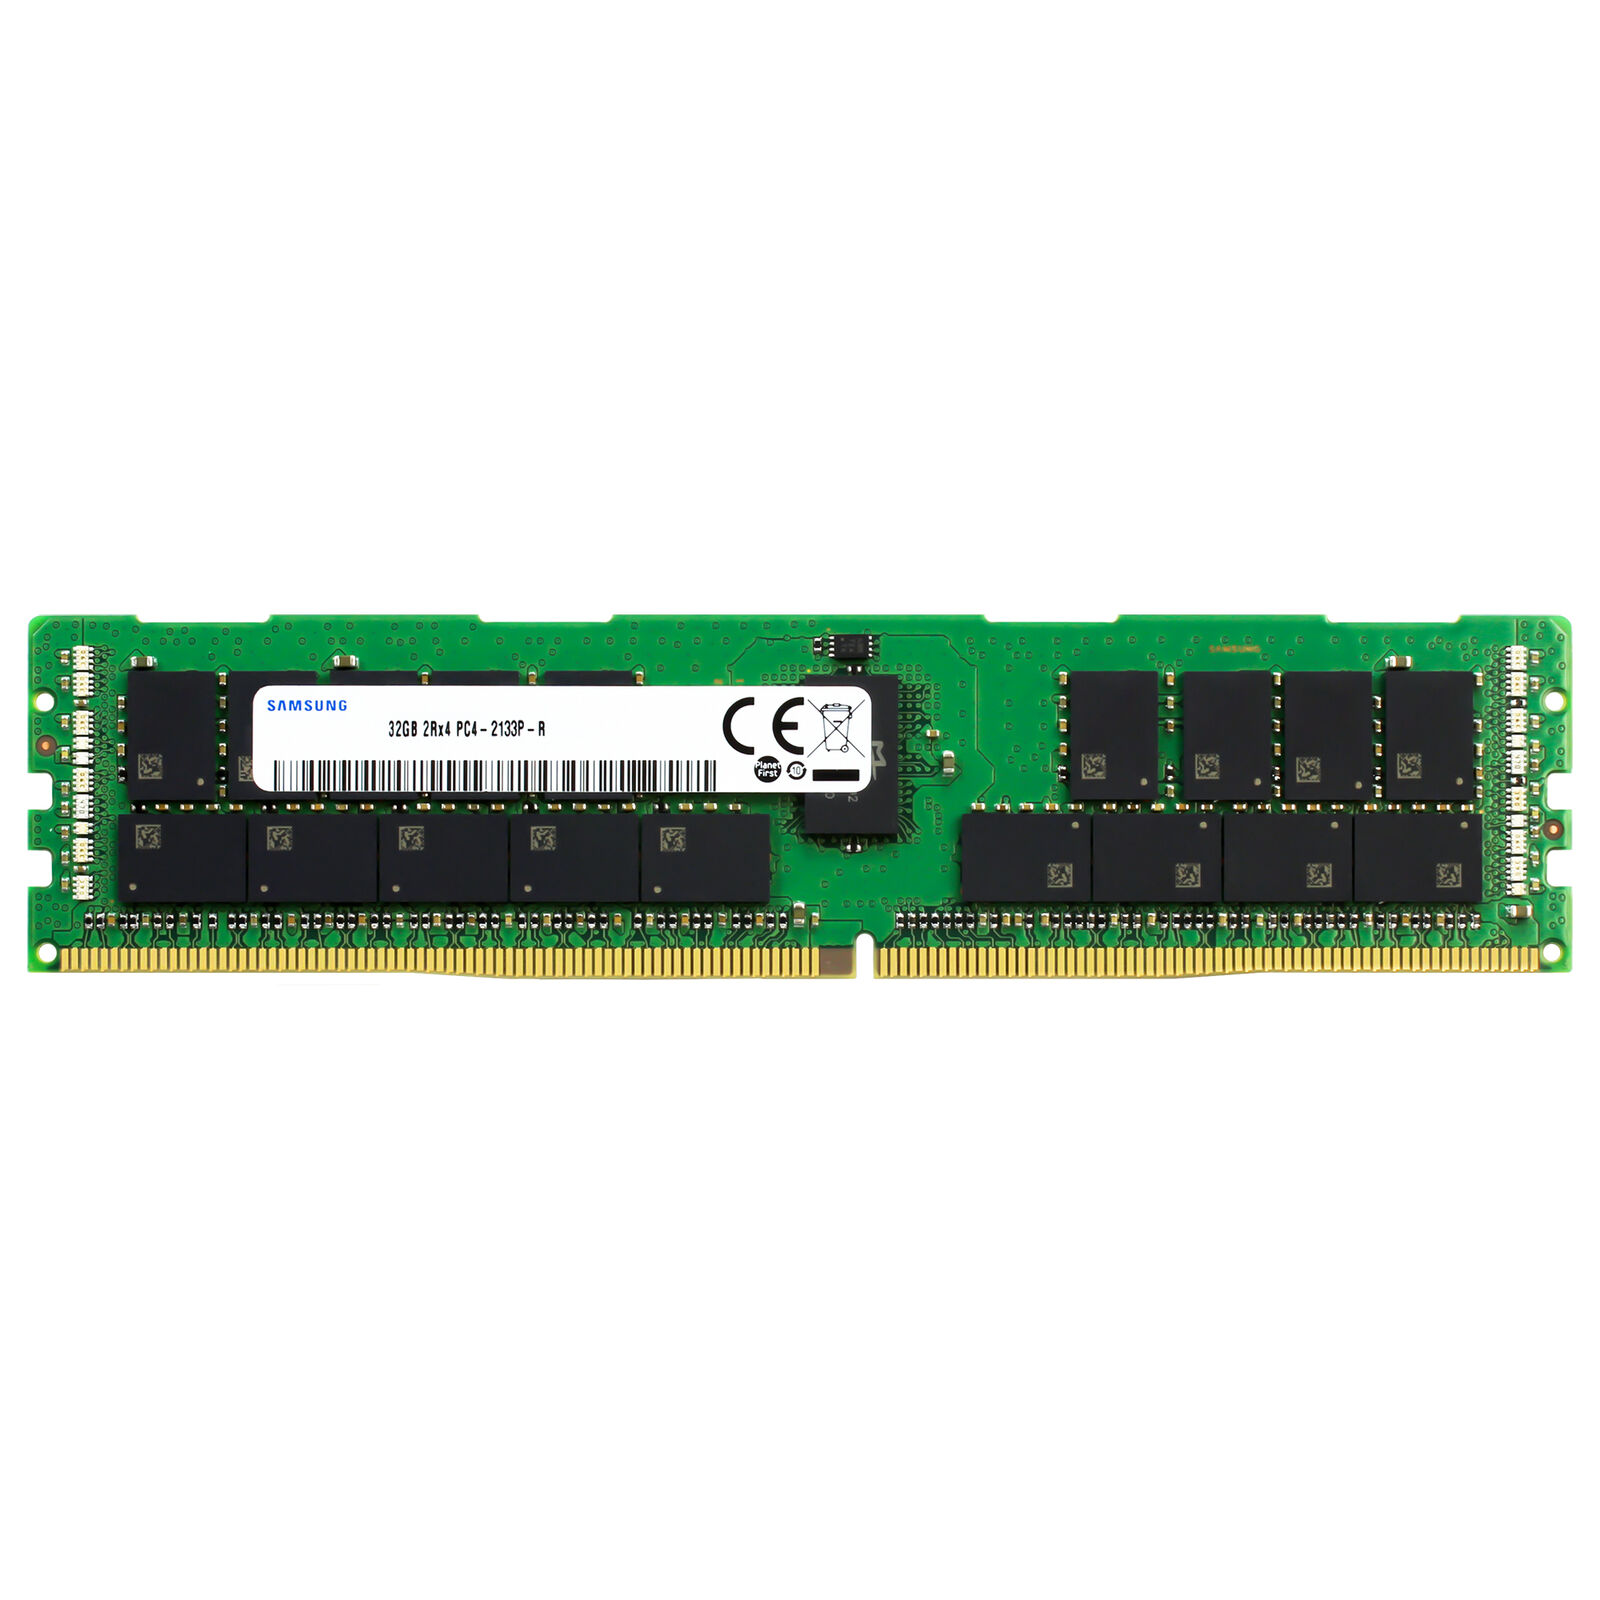 Samsung 32GB 2Rx4 PC4-2133 RDIMM DDR4-17000 ECC REG Registered Server Memory RAM